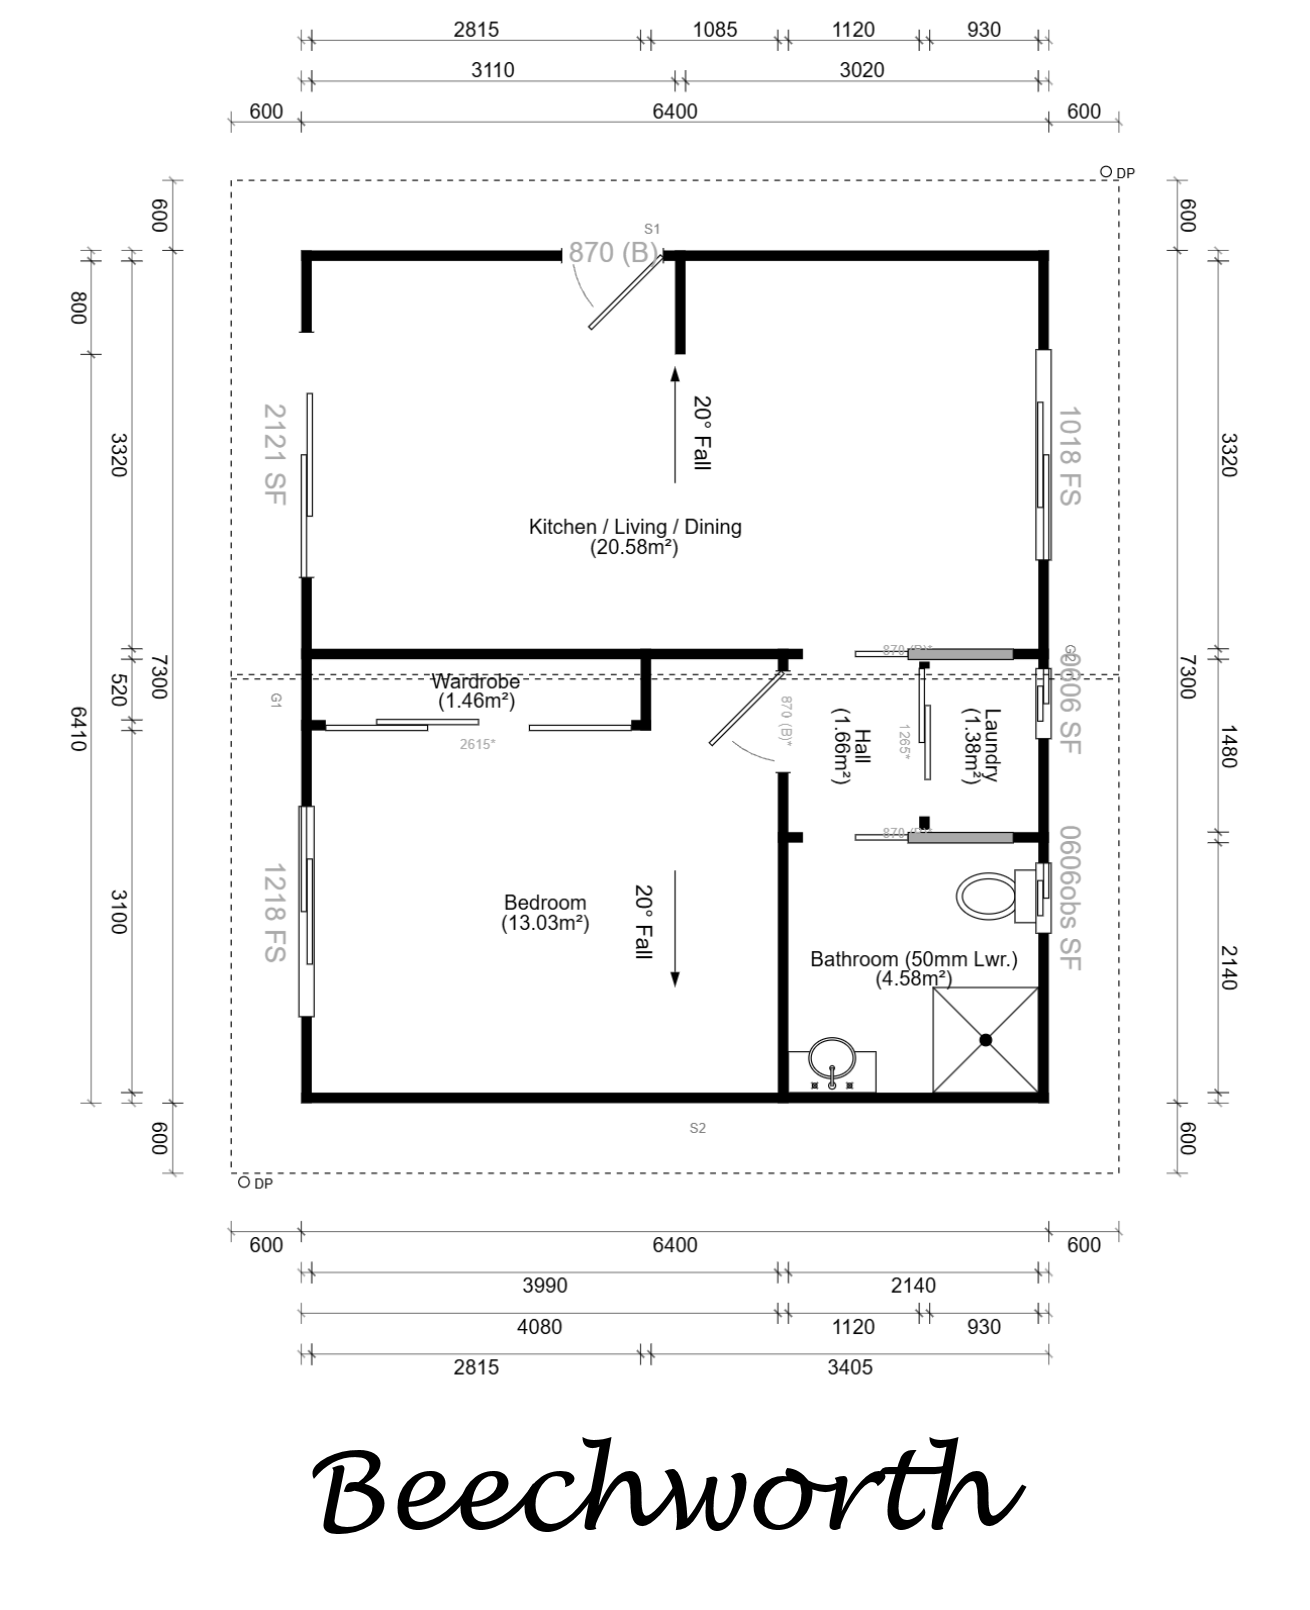 Beechworth floorplan image